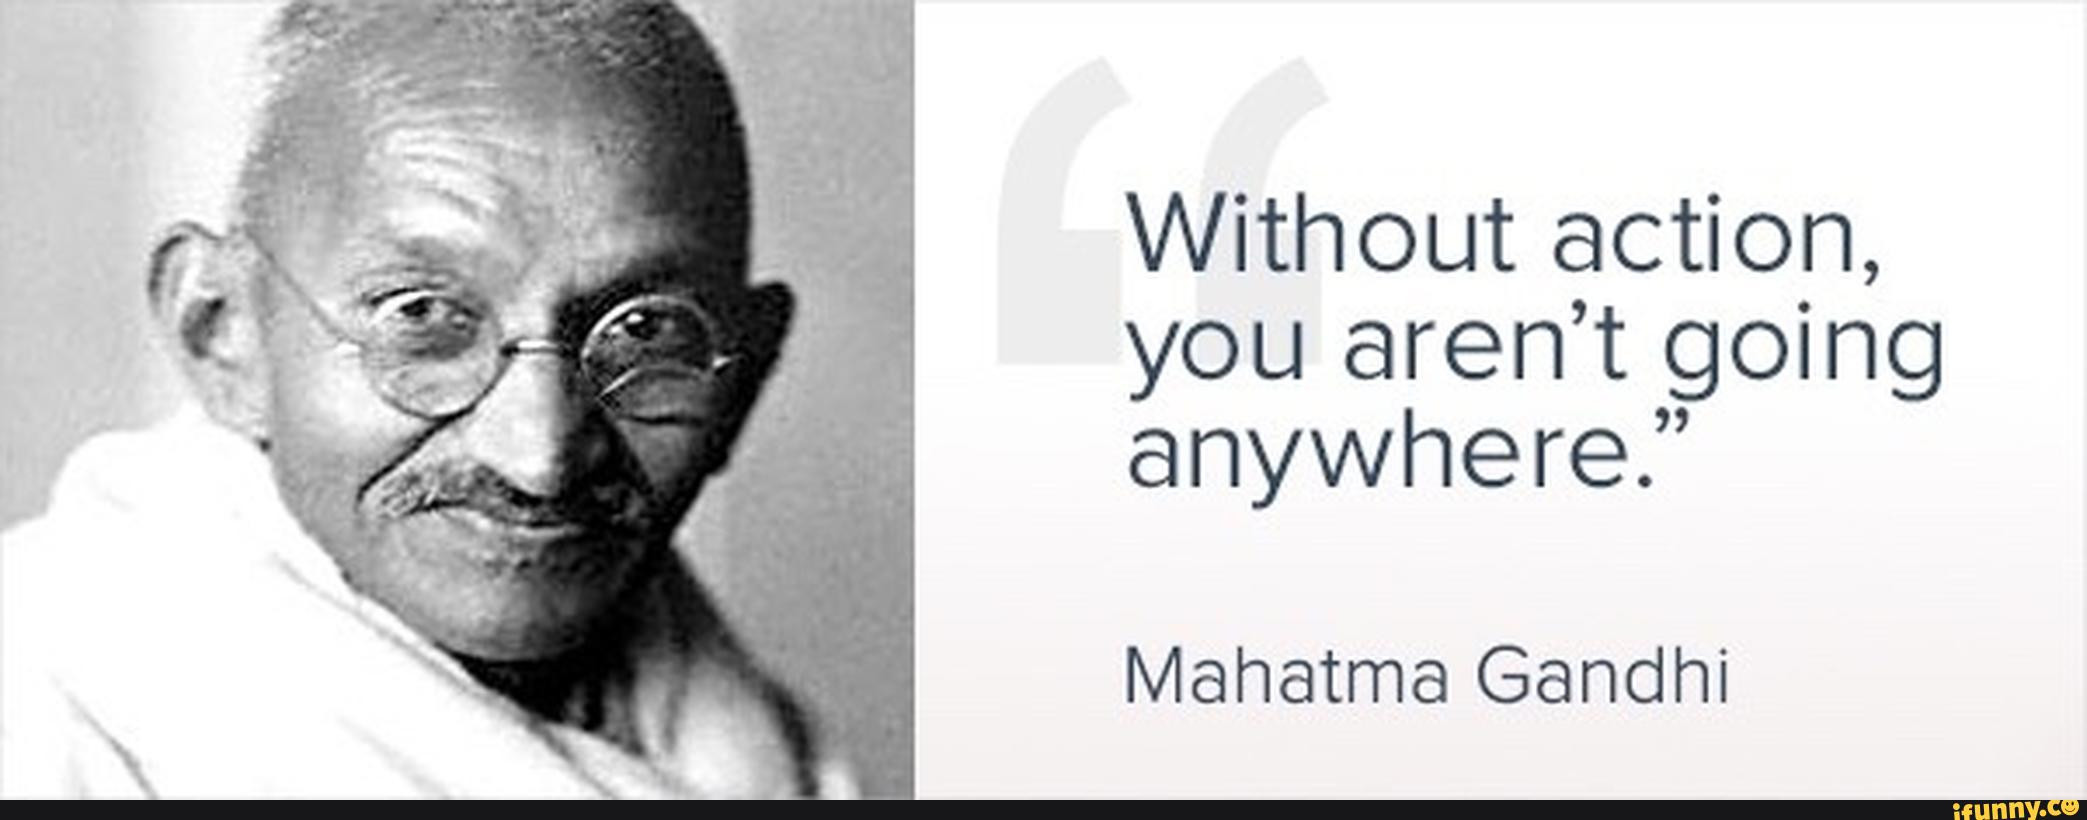 Gandhi Leadership Quotes
 Quotes about Leadership gandhi 16 quotes